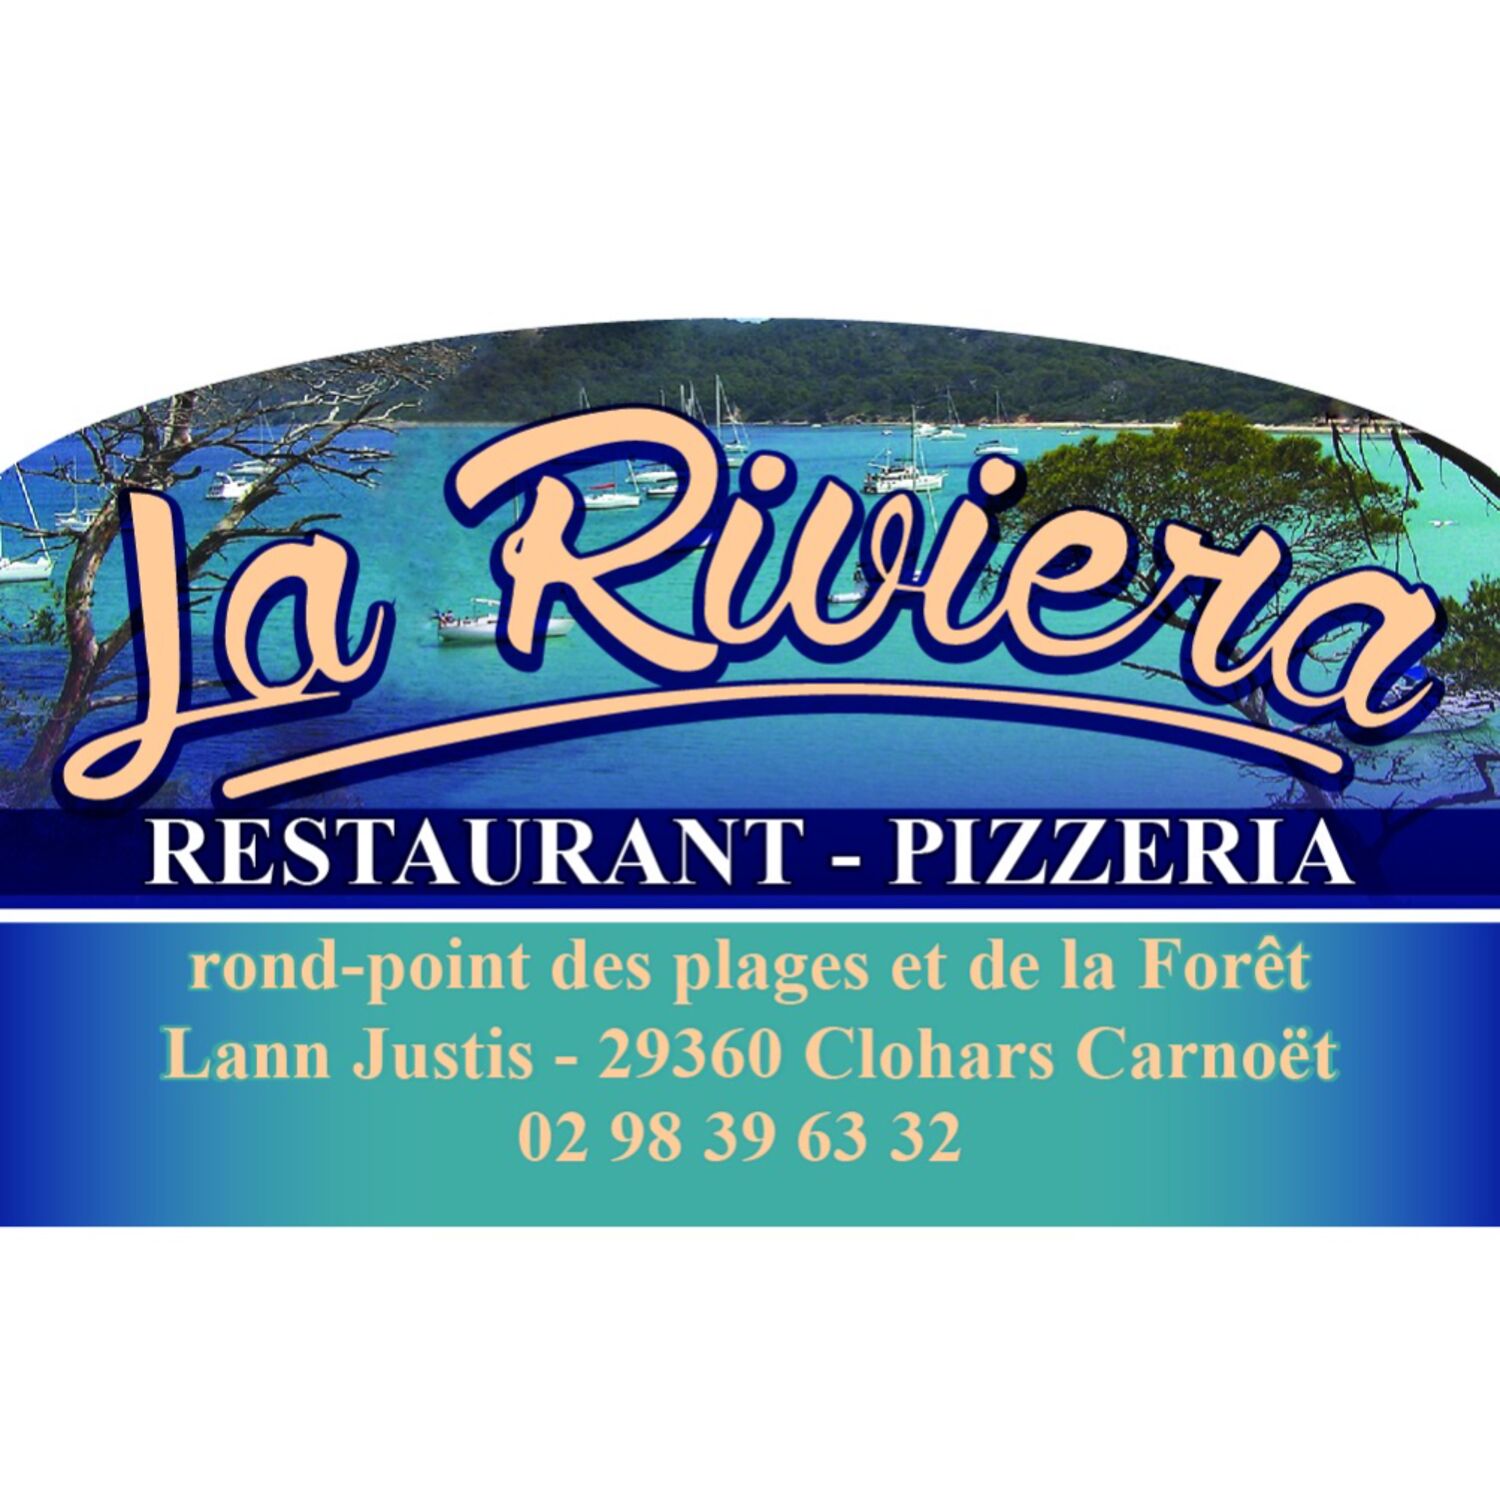 Le restaurant La Riviera de Clohars Carnoët recrute